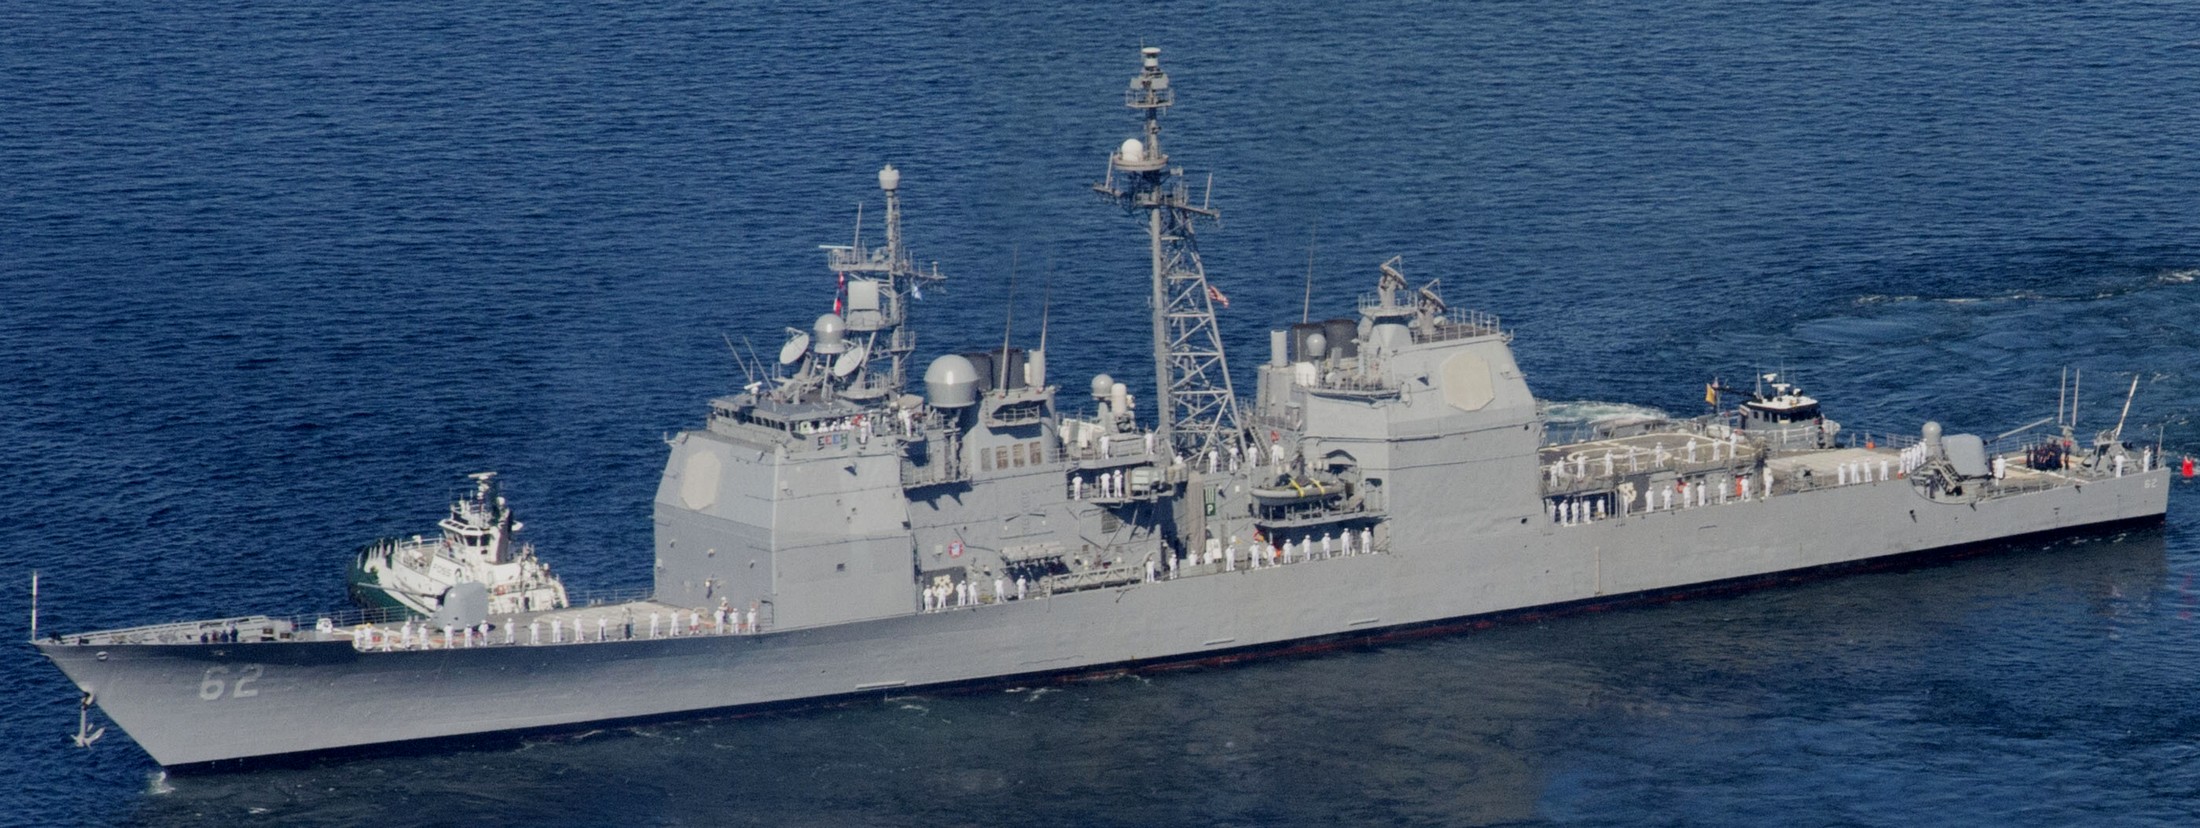 cg-62 uss chancellorsville ticonderoga class guided missile cruiser aegis us navy seattle washington 36